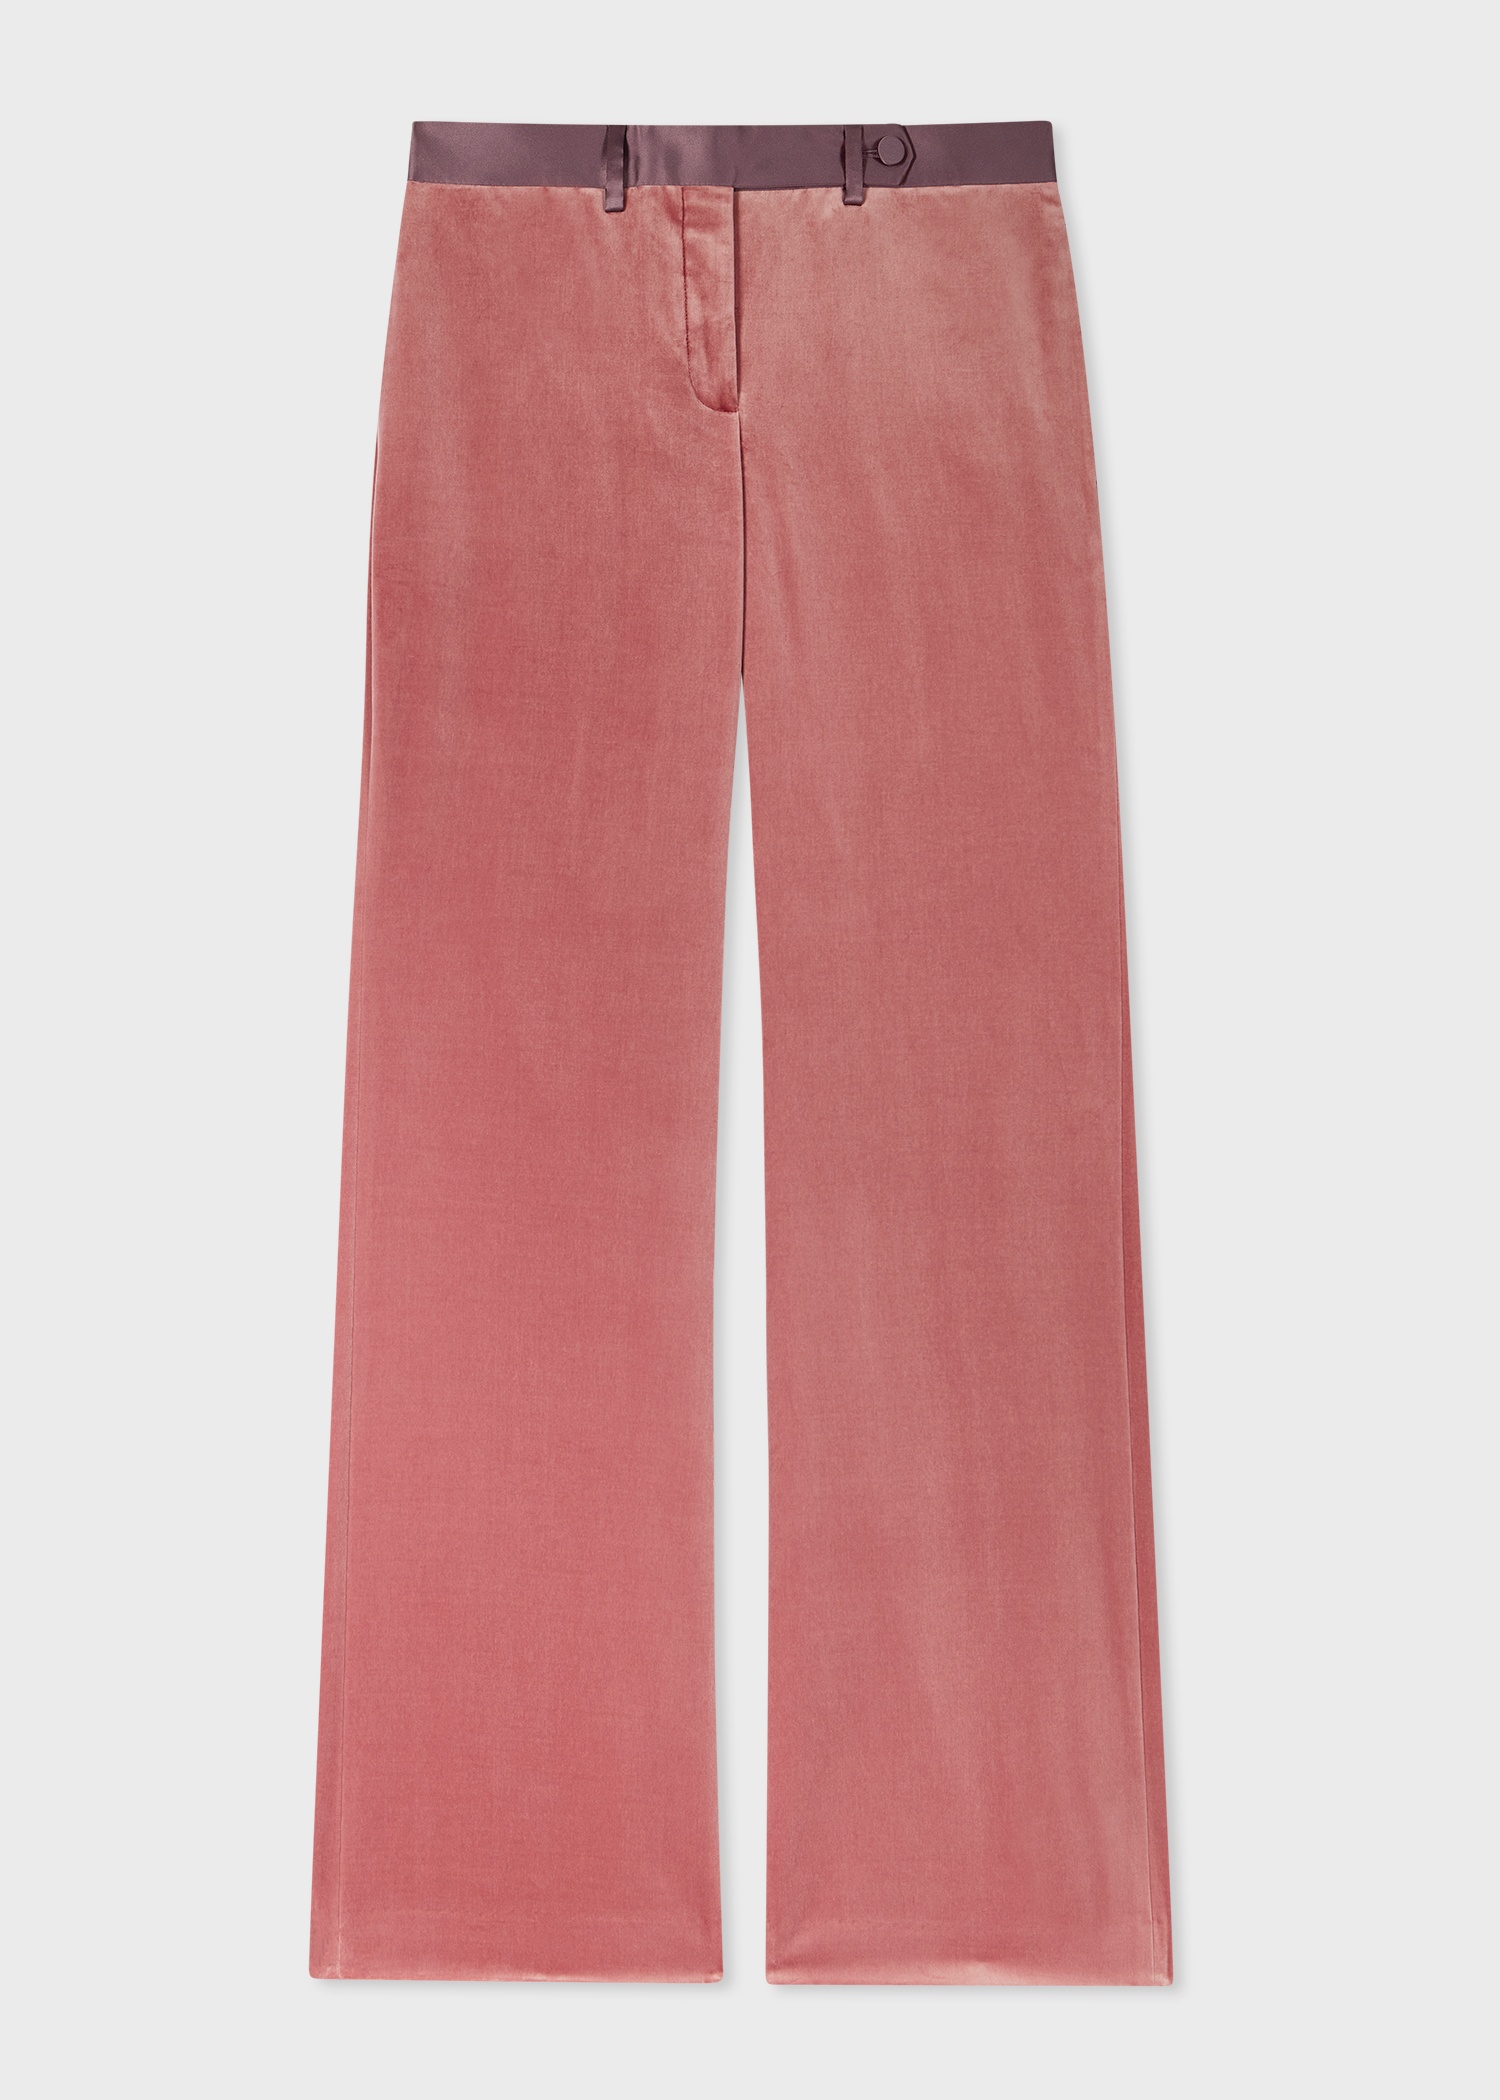 Women's Pink Bootcut Velvet Trousers - 1